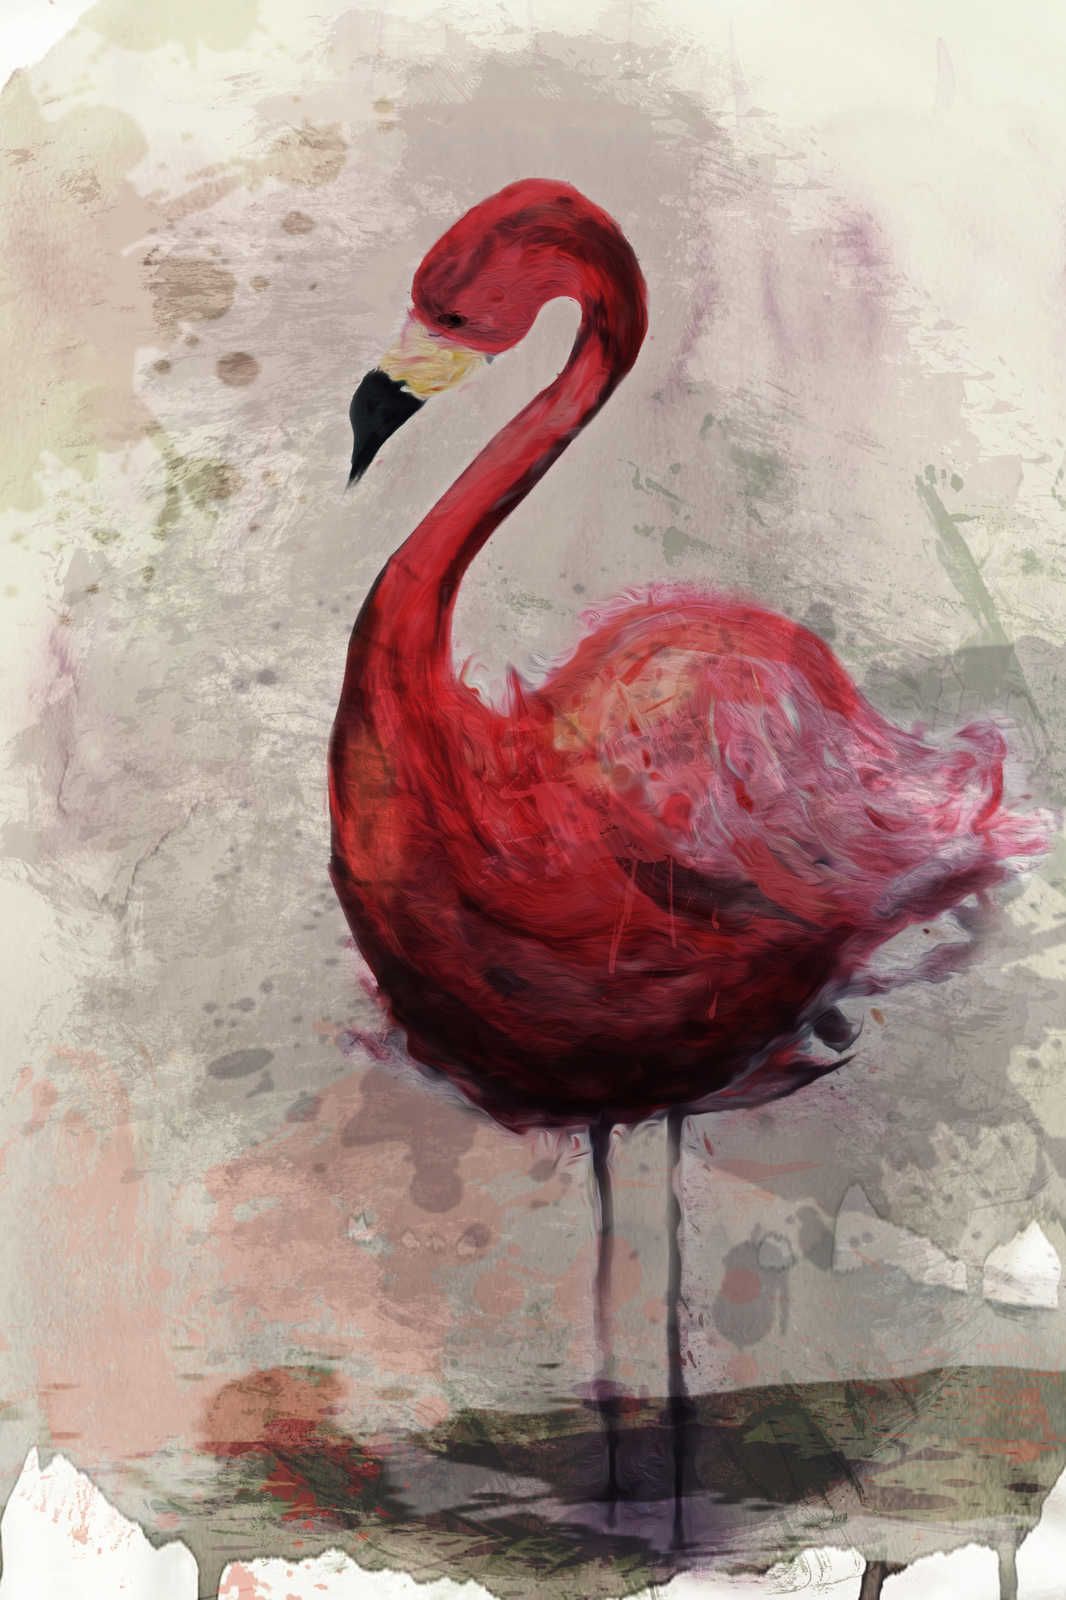             Aquarelles Leinwandbild mit Flamingo Motiv im Zeichenstil – 0,90 m x 0,60 m
        